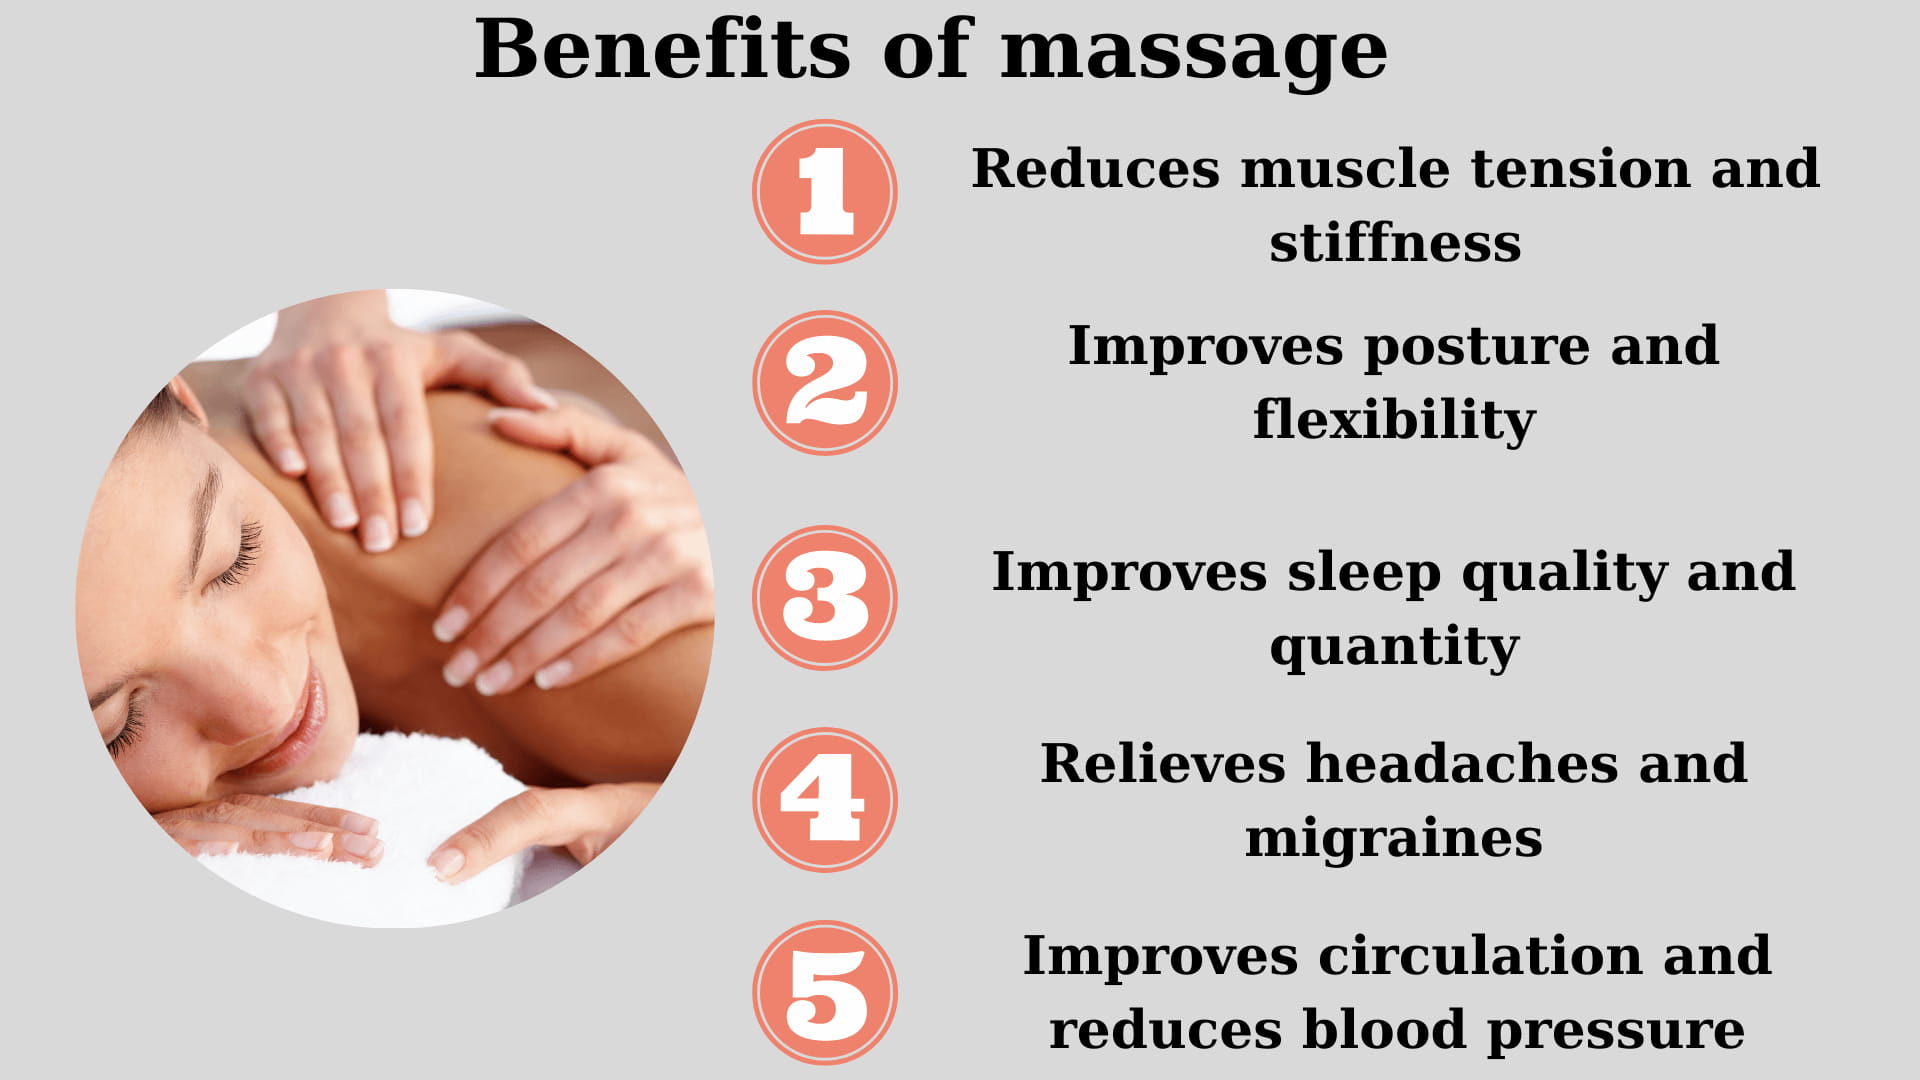 11 Long-term Health Benefits of Massage